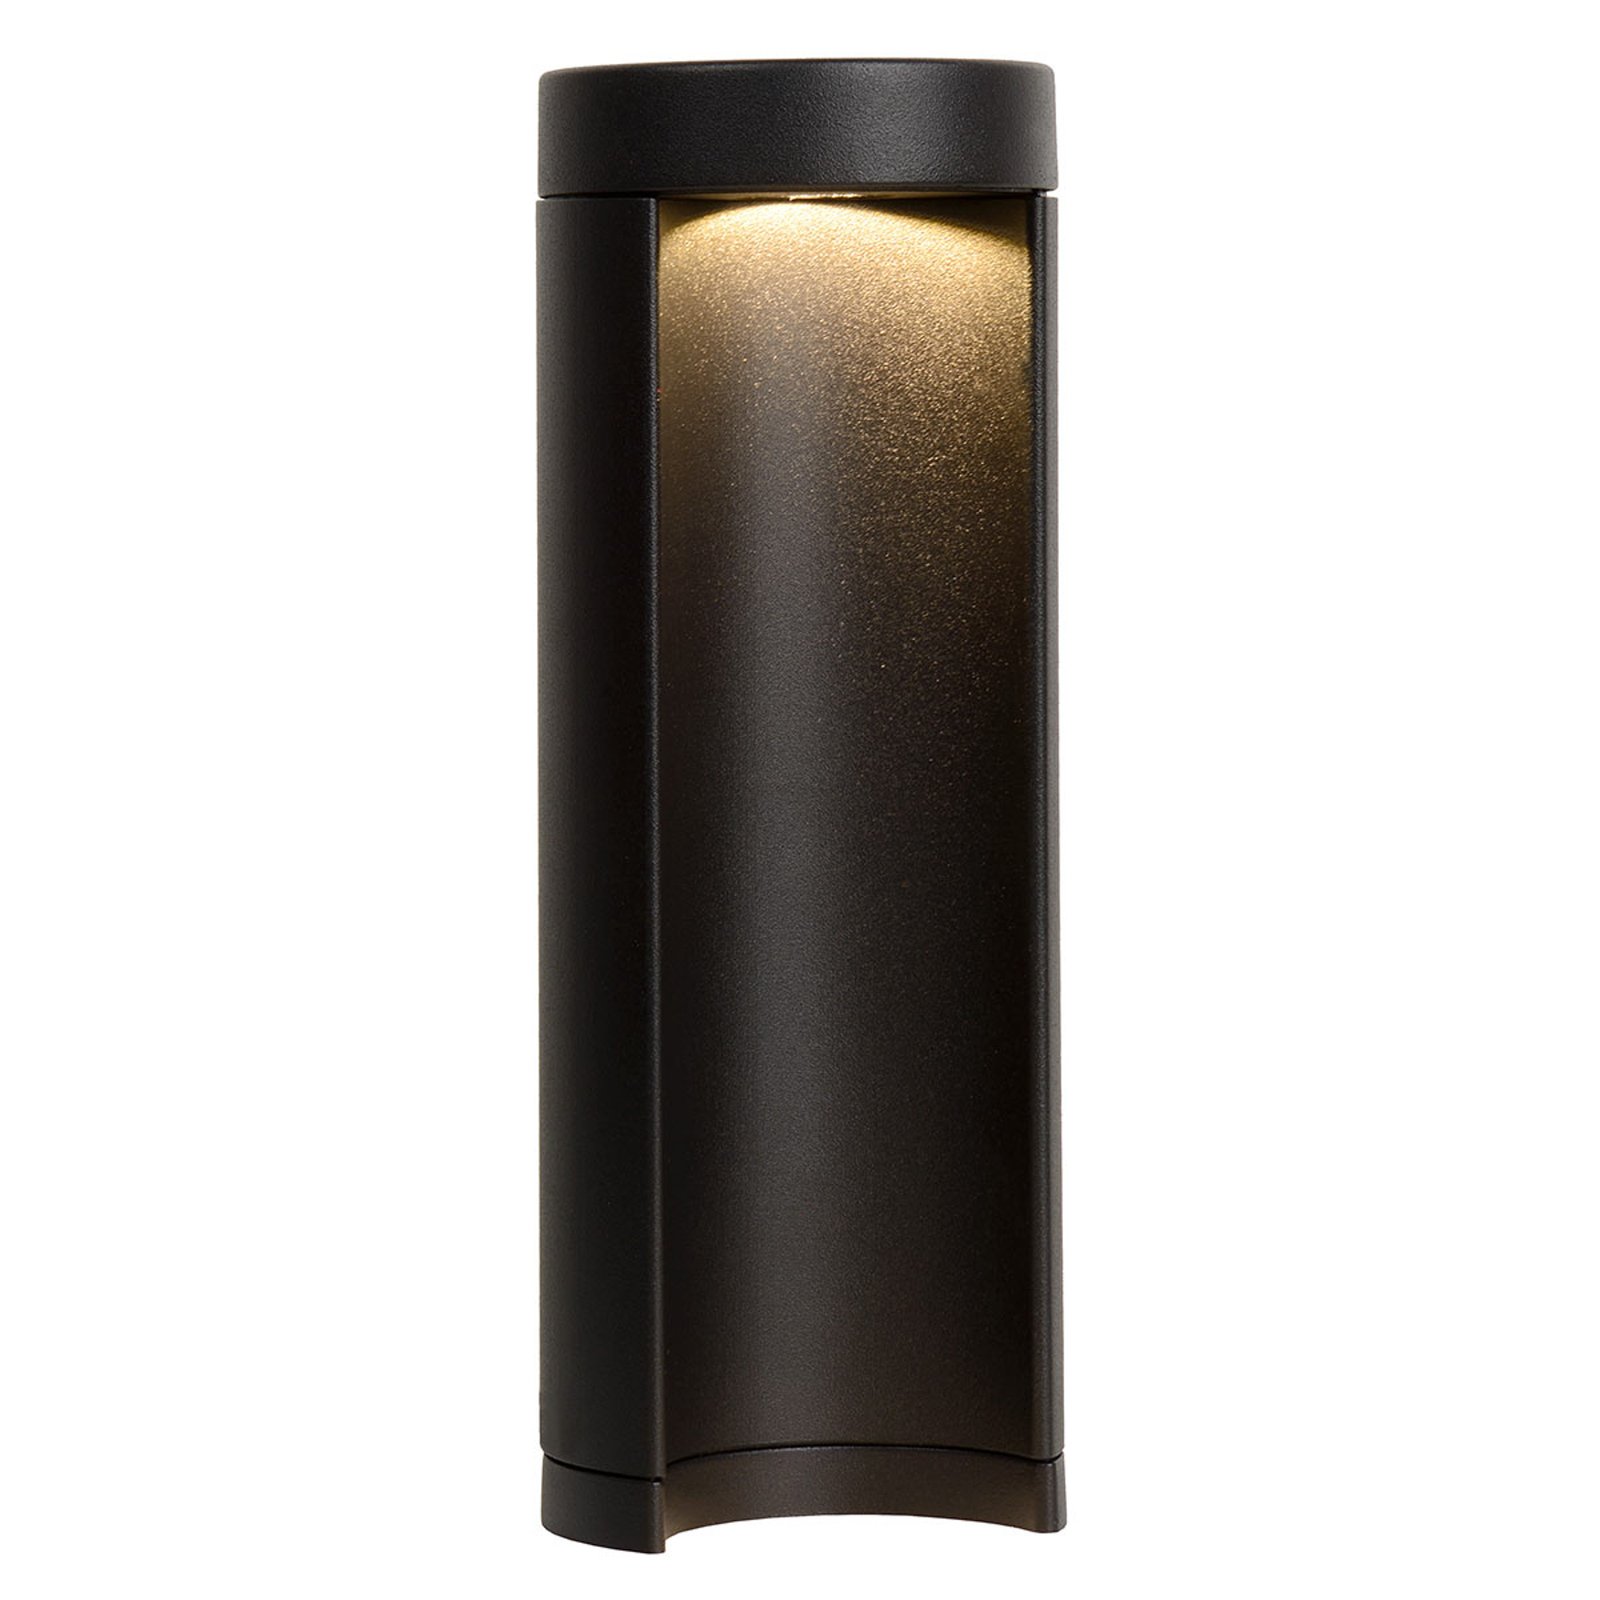 LED pedestal light Combo in a beautiful design, 25 cm